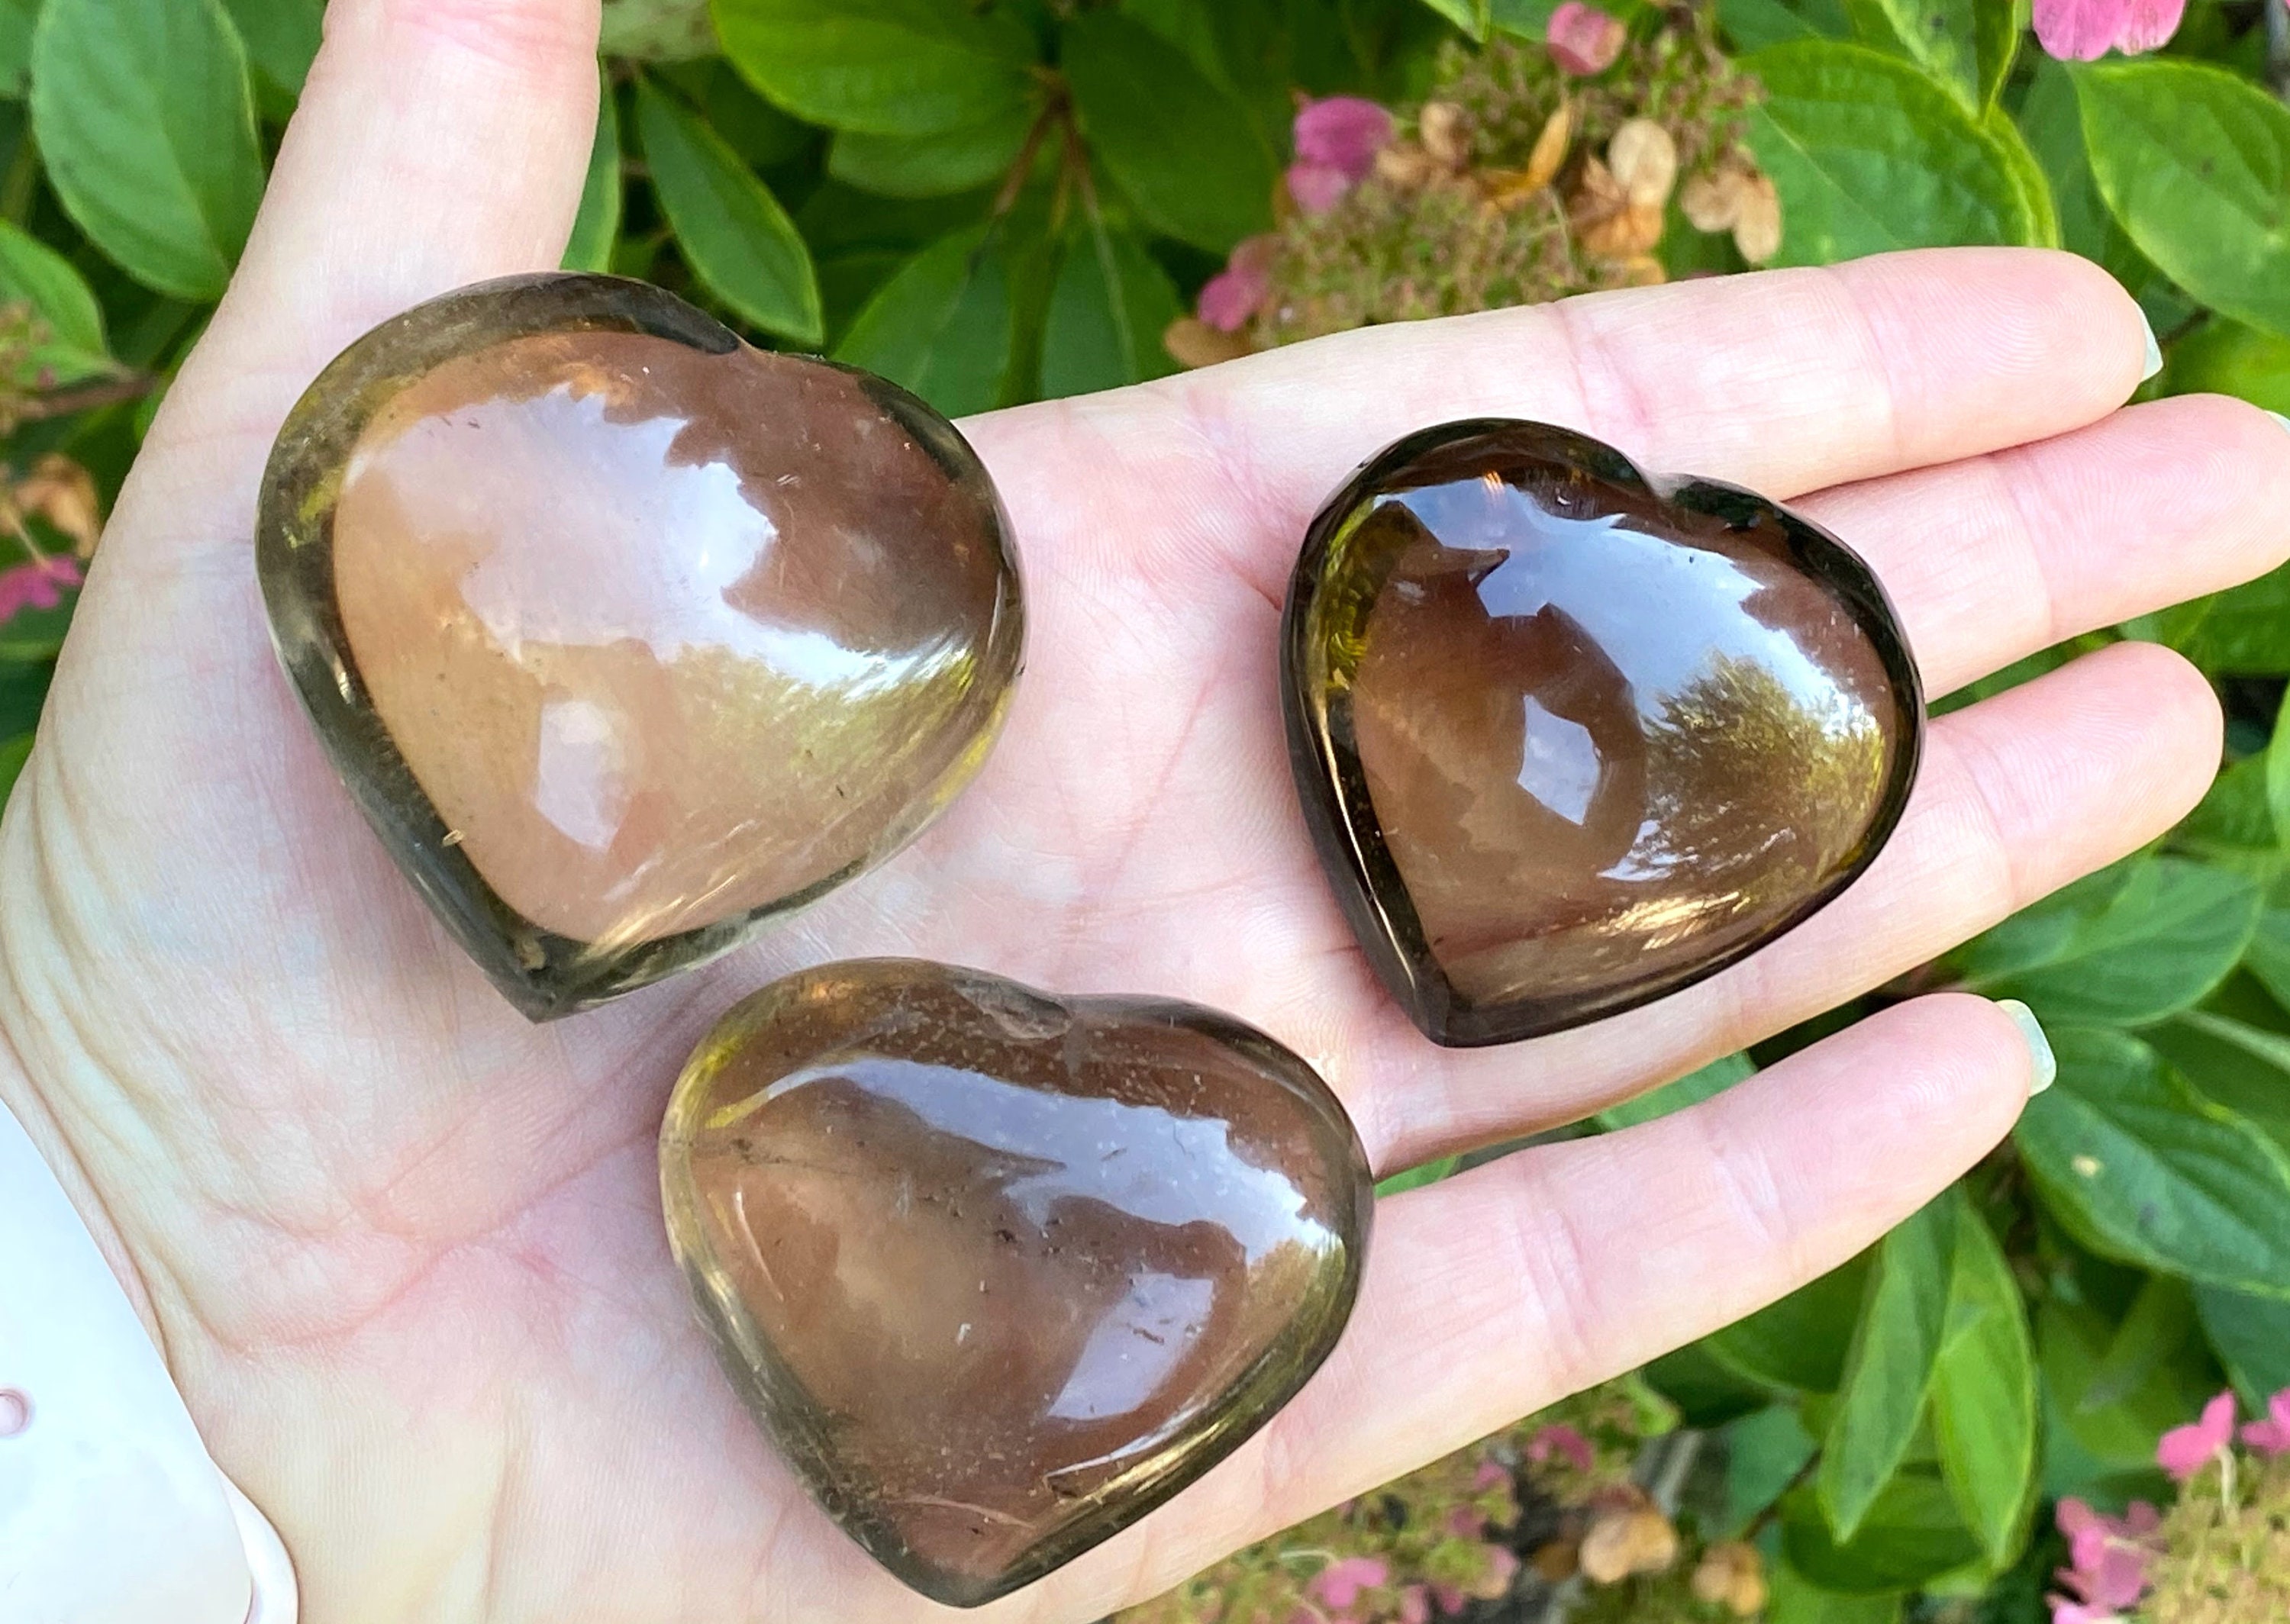 Natural Stone Hand Carved Heart Shaped, Heart Gemstones Crystal Carving,  Heart Healing Crystals, Mango Jasper Heart Cabochon, Wholesale Lot 